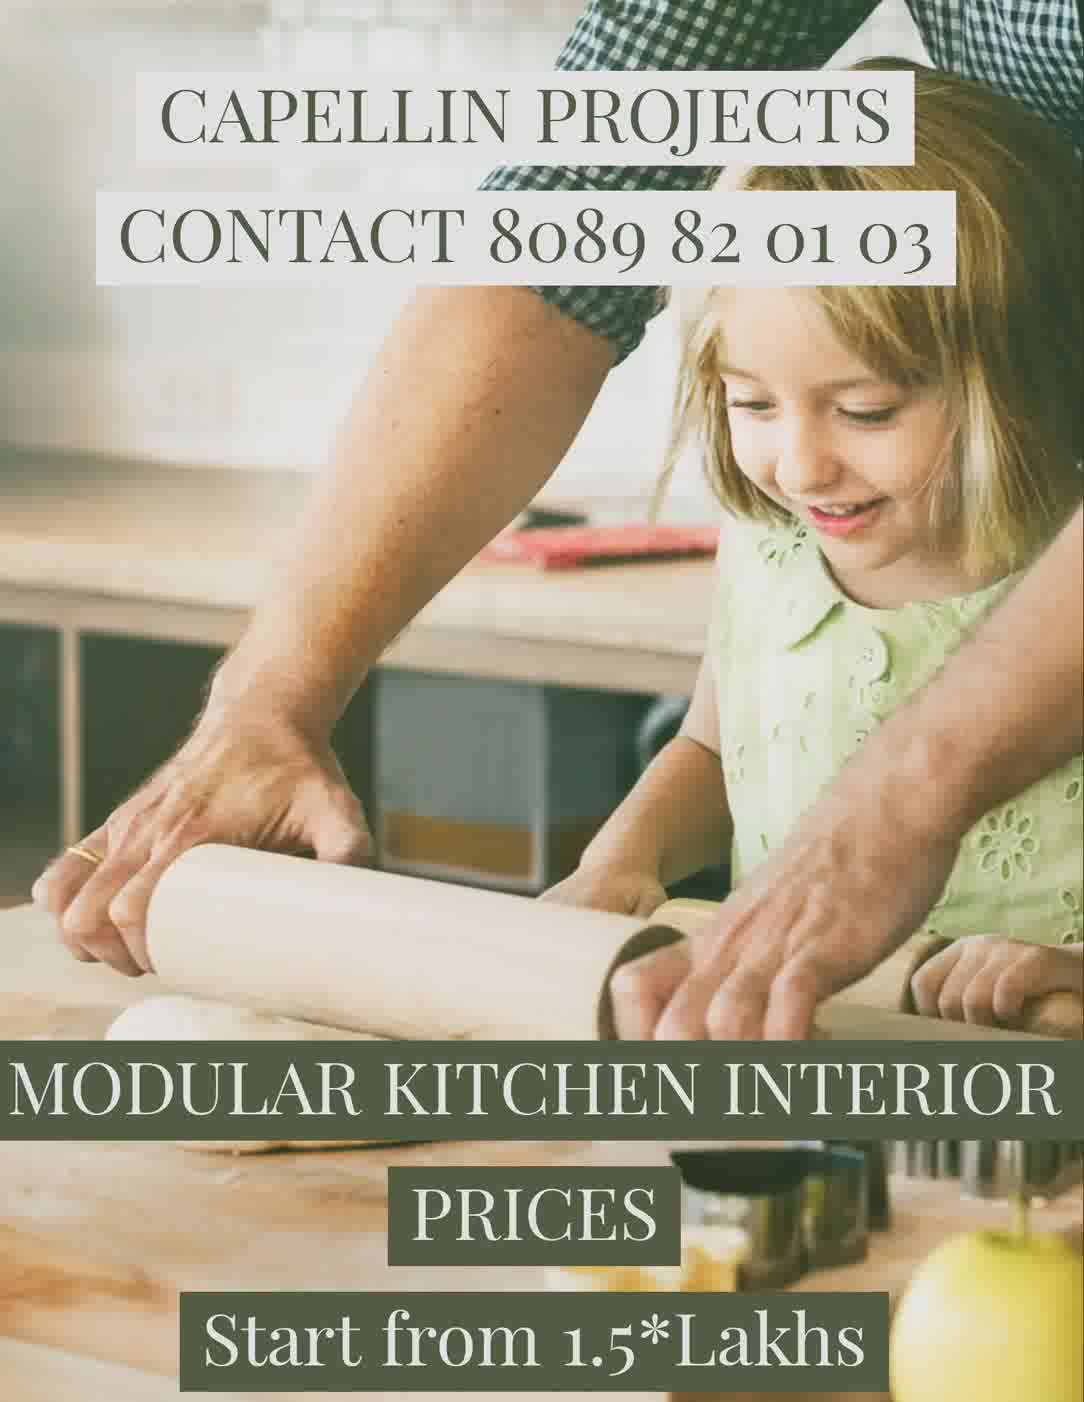 #ModularKitchen #KitchenIdeas #KitchenInterior #KitchenCabinet #kitcheninteriors